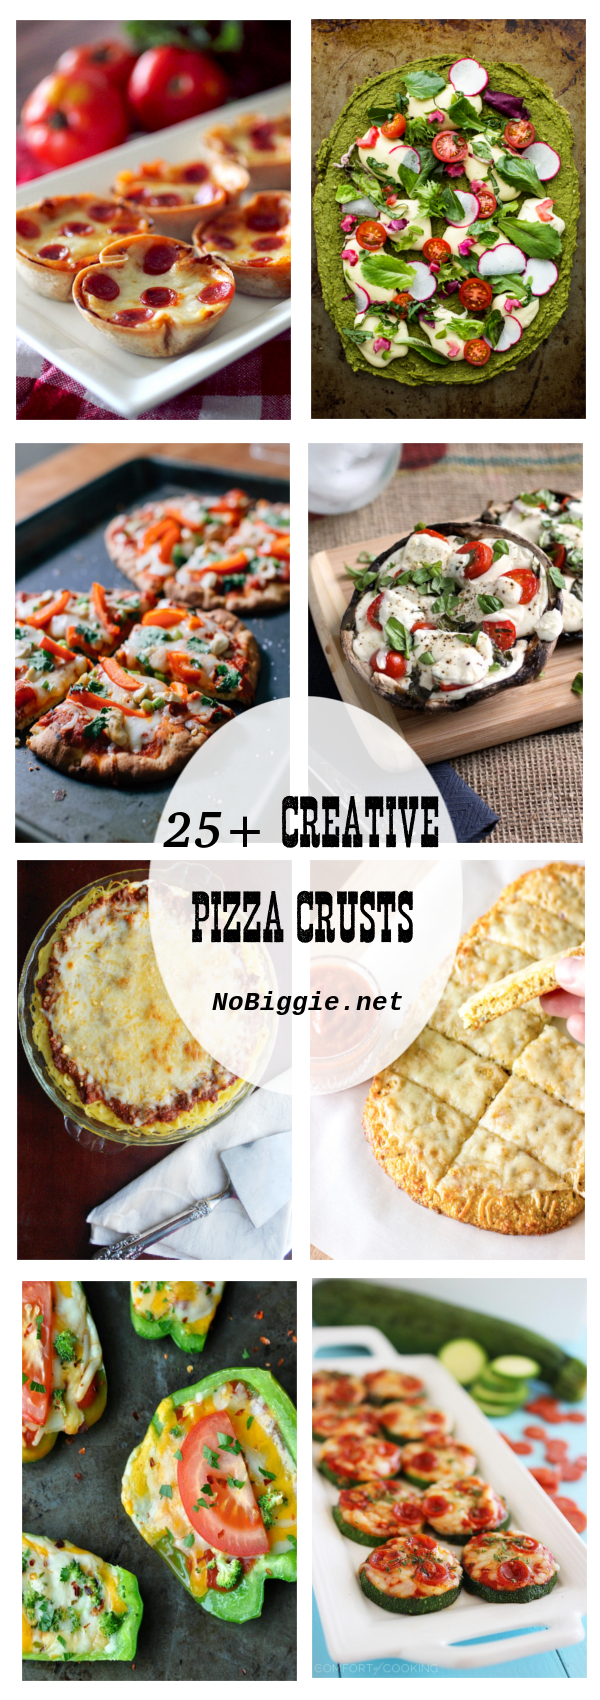 25+ Creative Pizza Crusts | NoBiggie.net